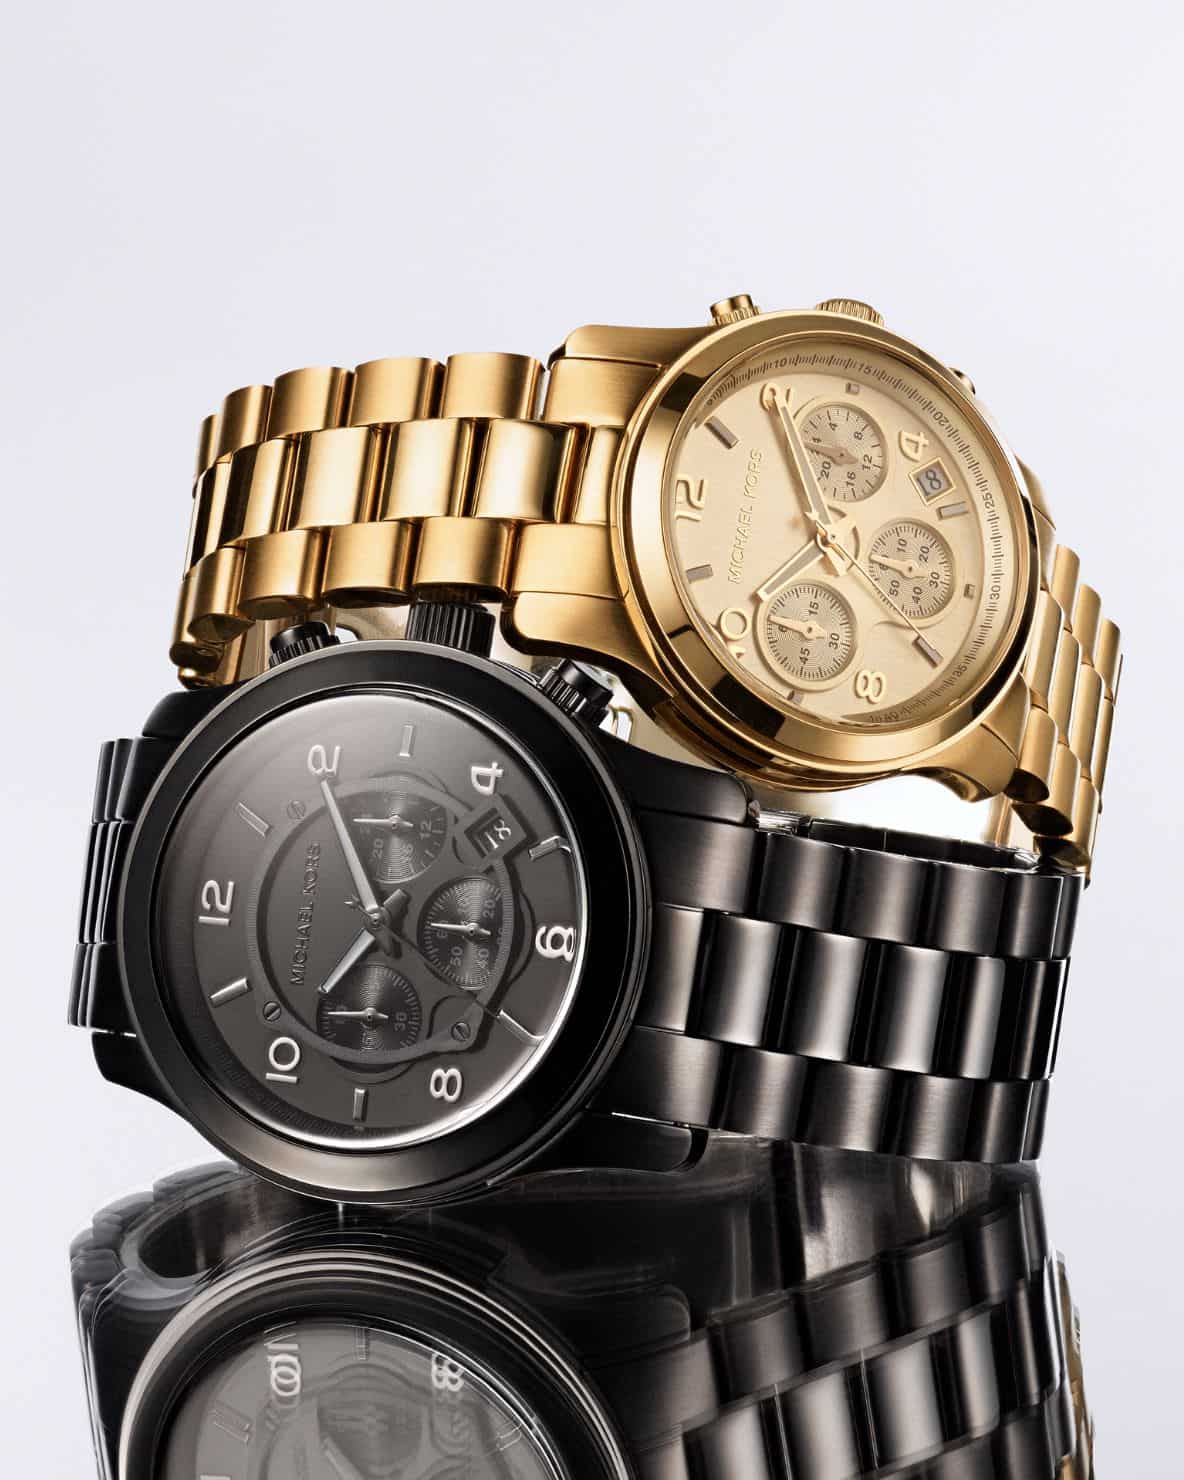 Men's Watches: Designer Wrist Watches For Men | Michael Kors Canada